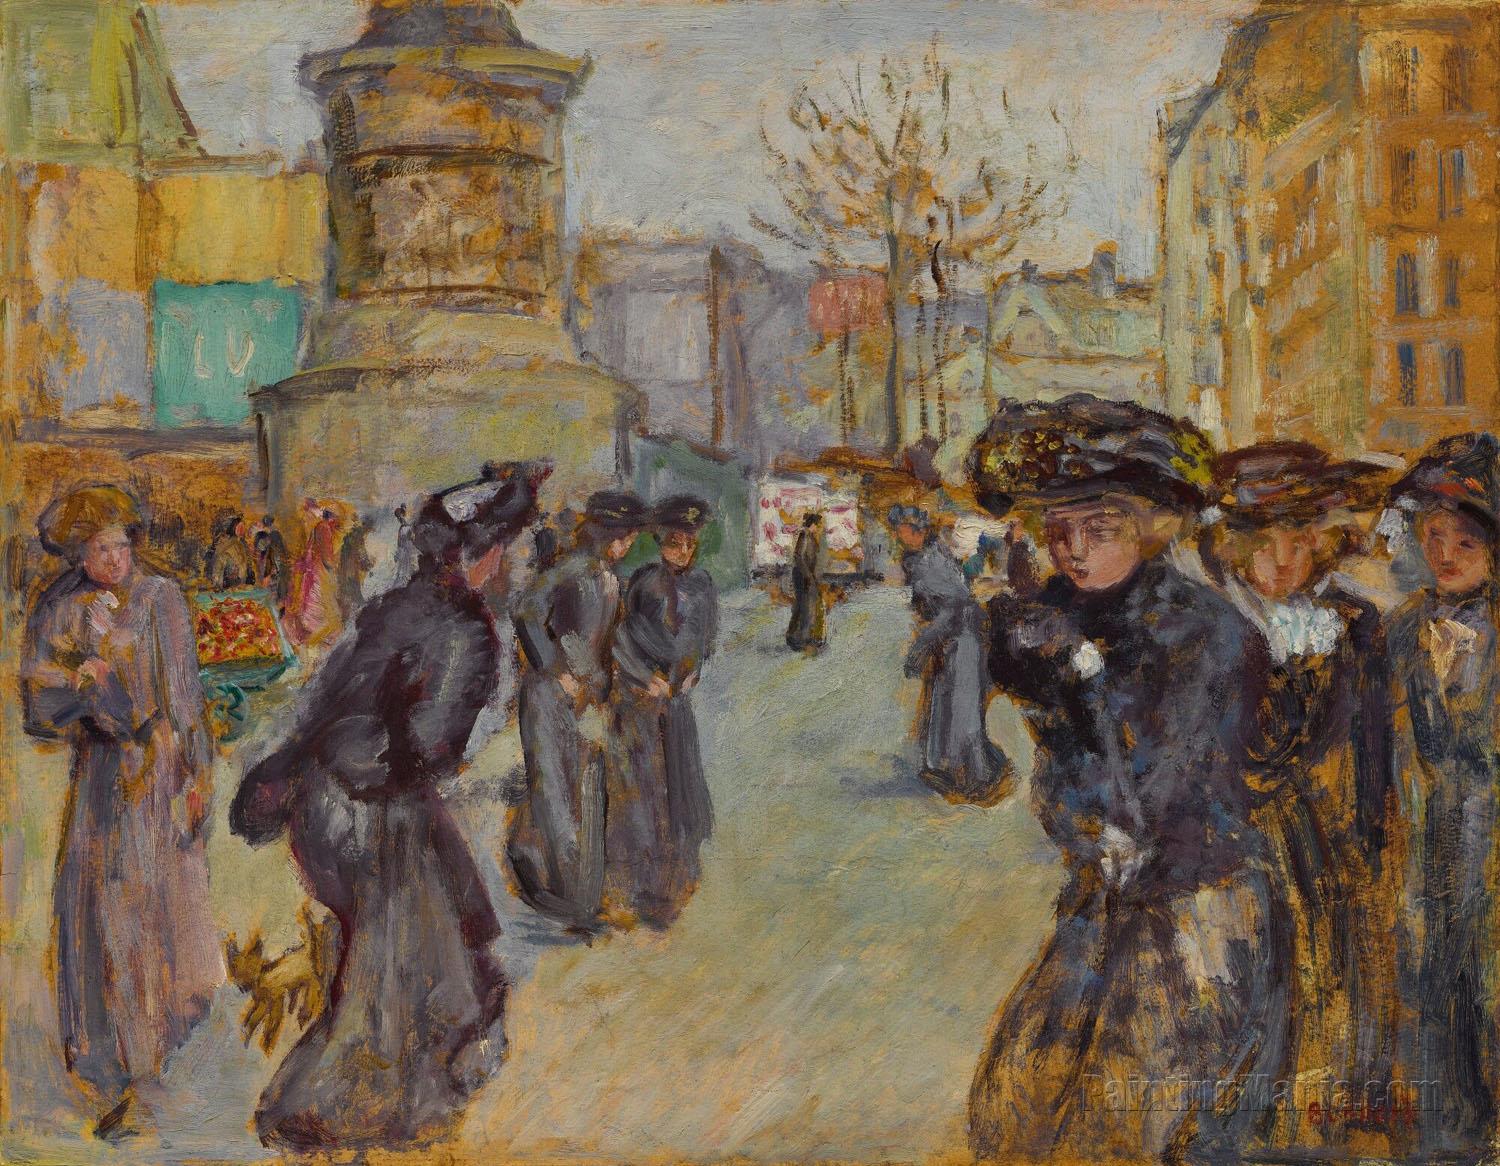 La Place Clichy 1900